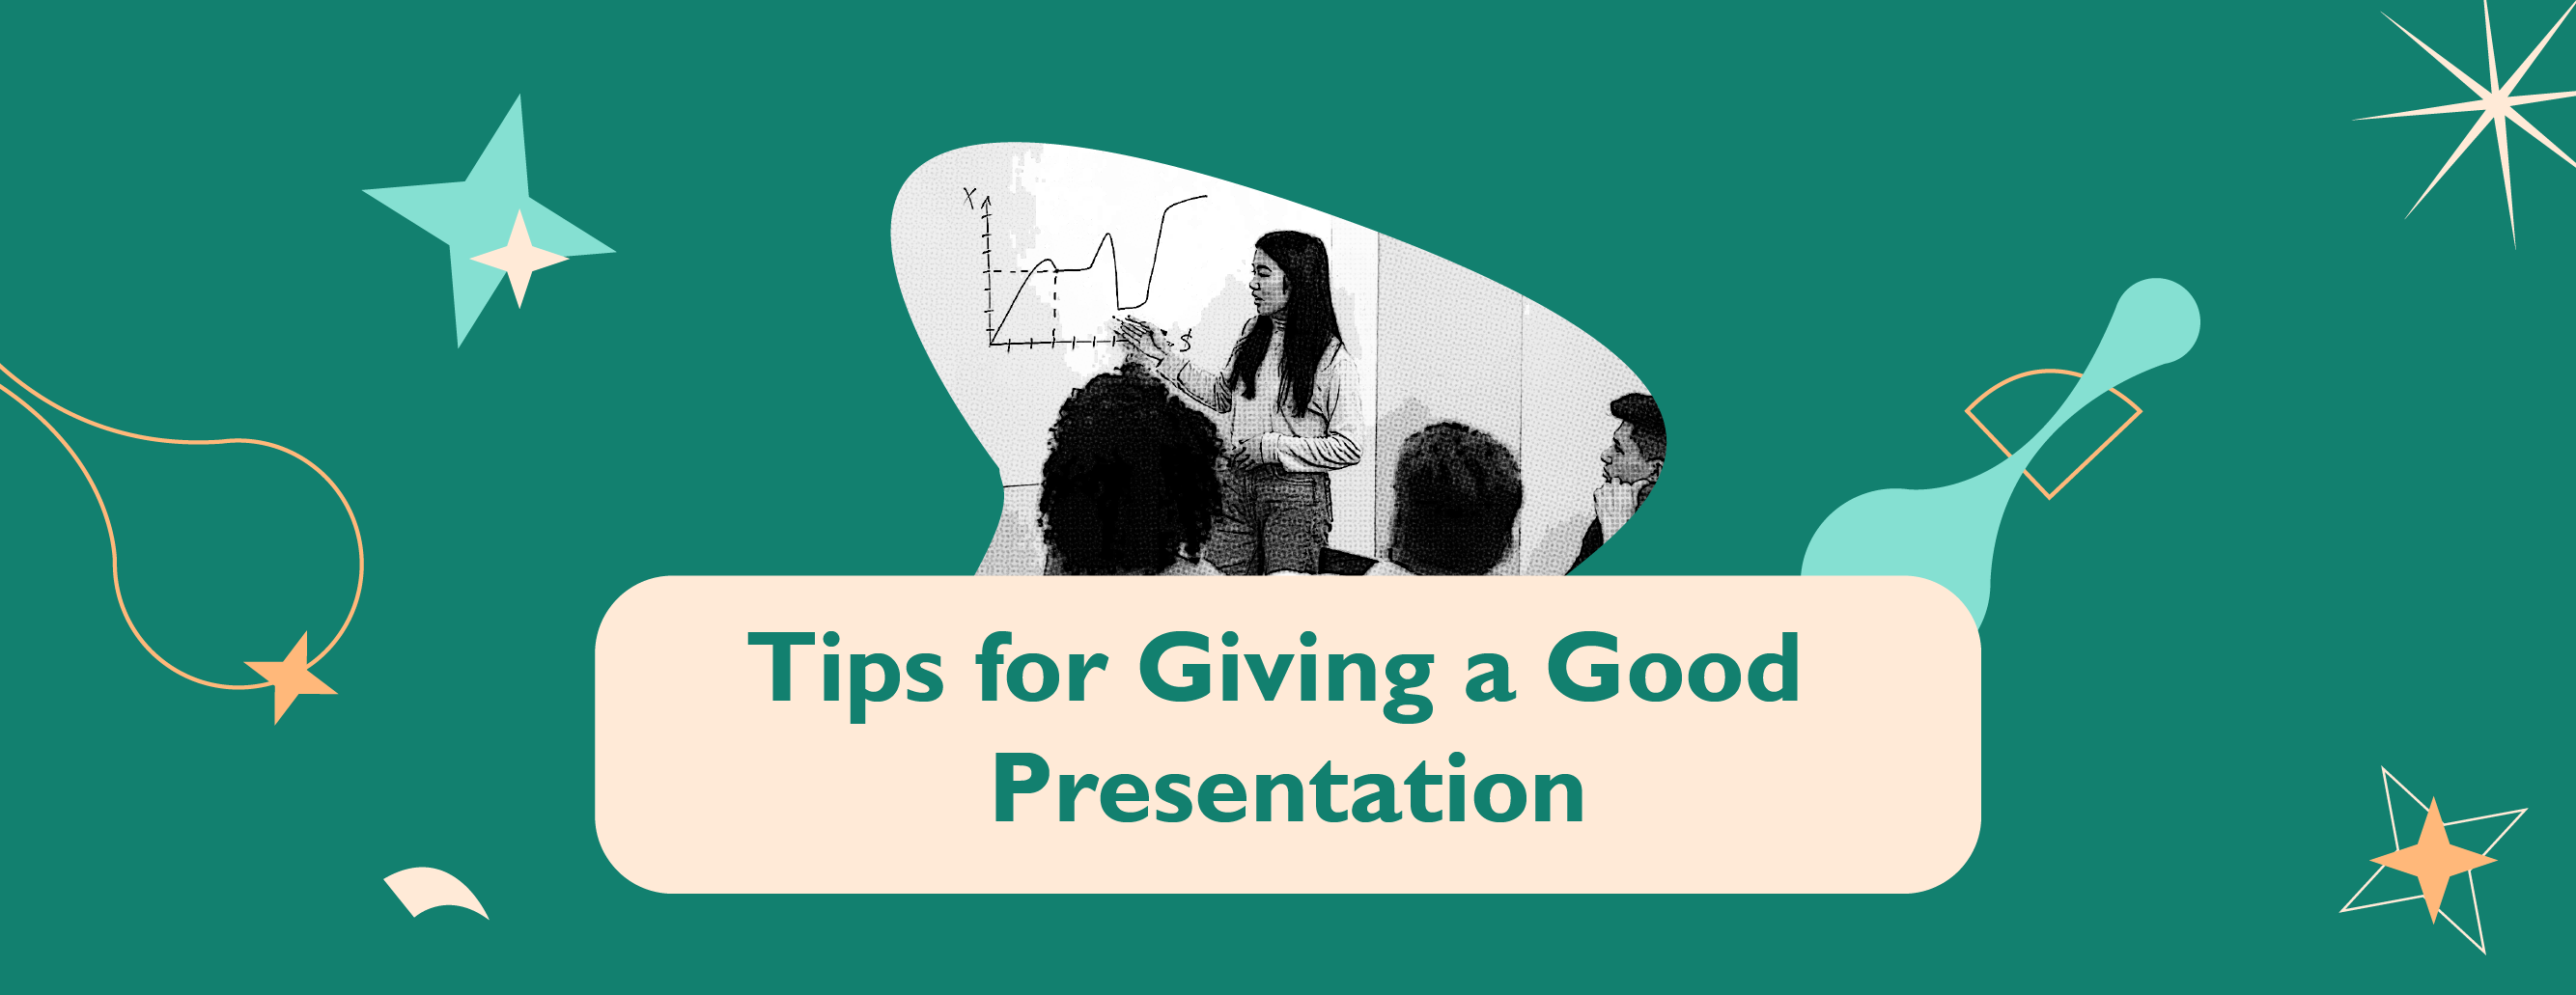 presentation to good